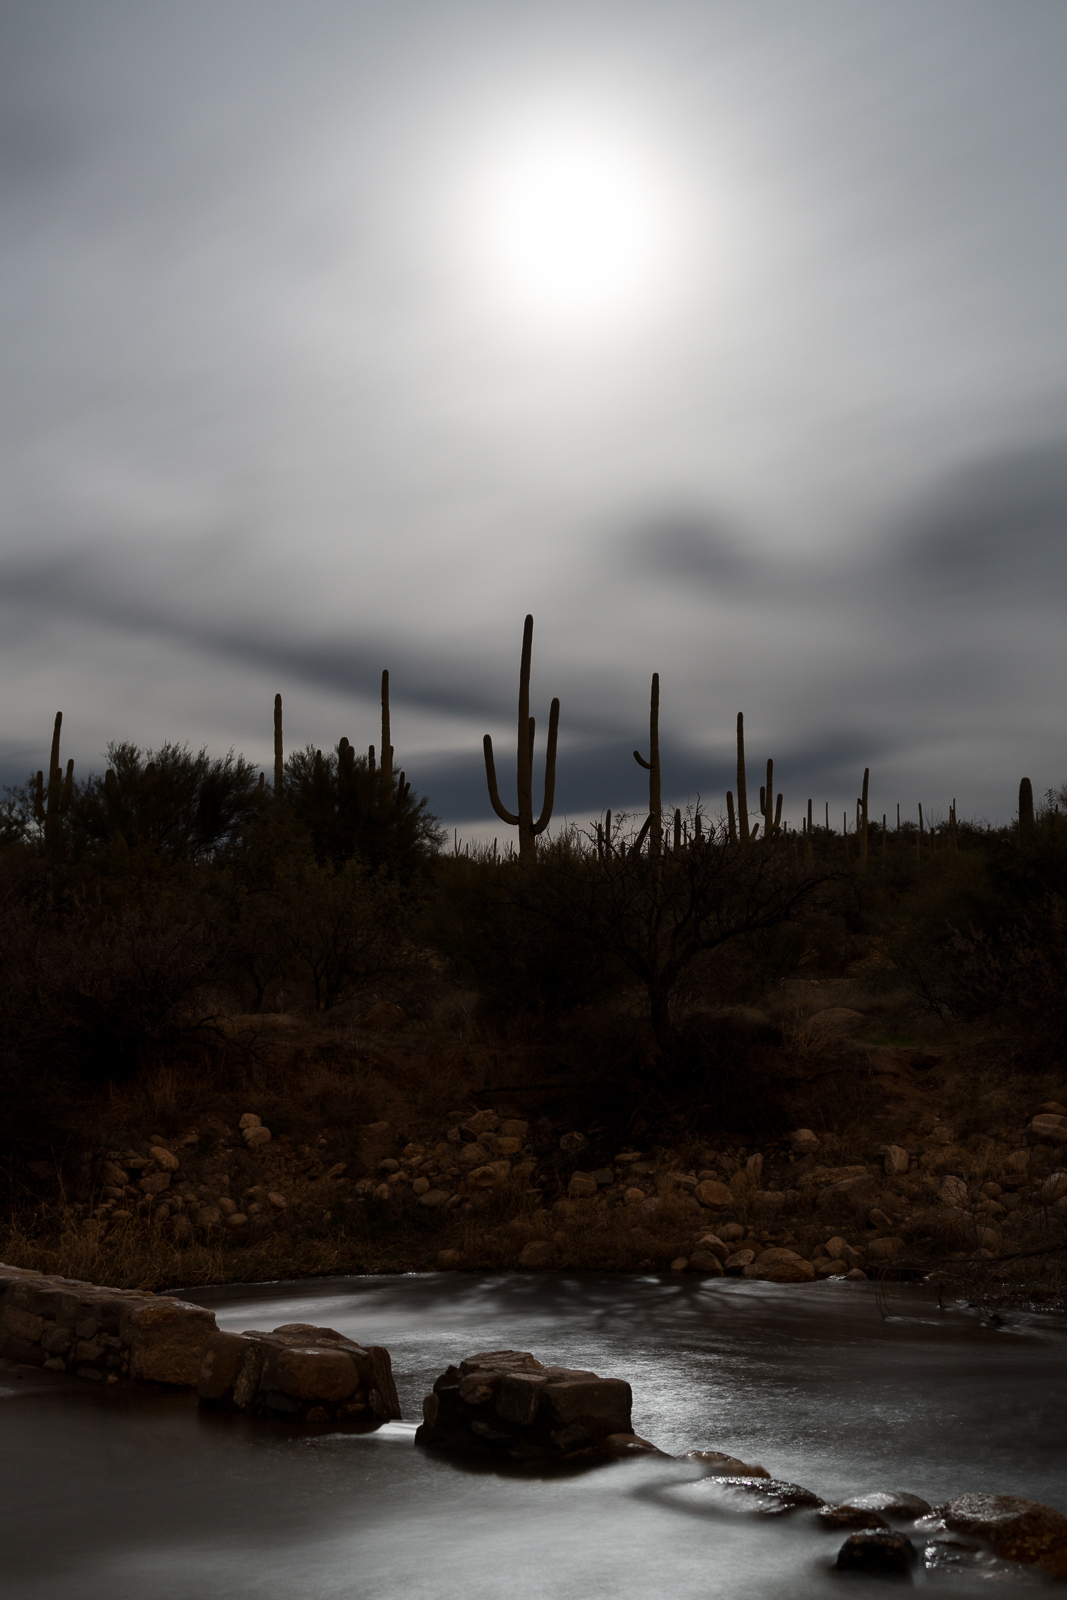 Full Moon, Saguaros and water in Sabino Canyon. January 2016.